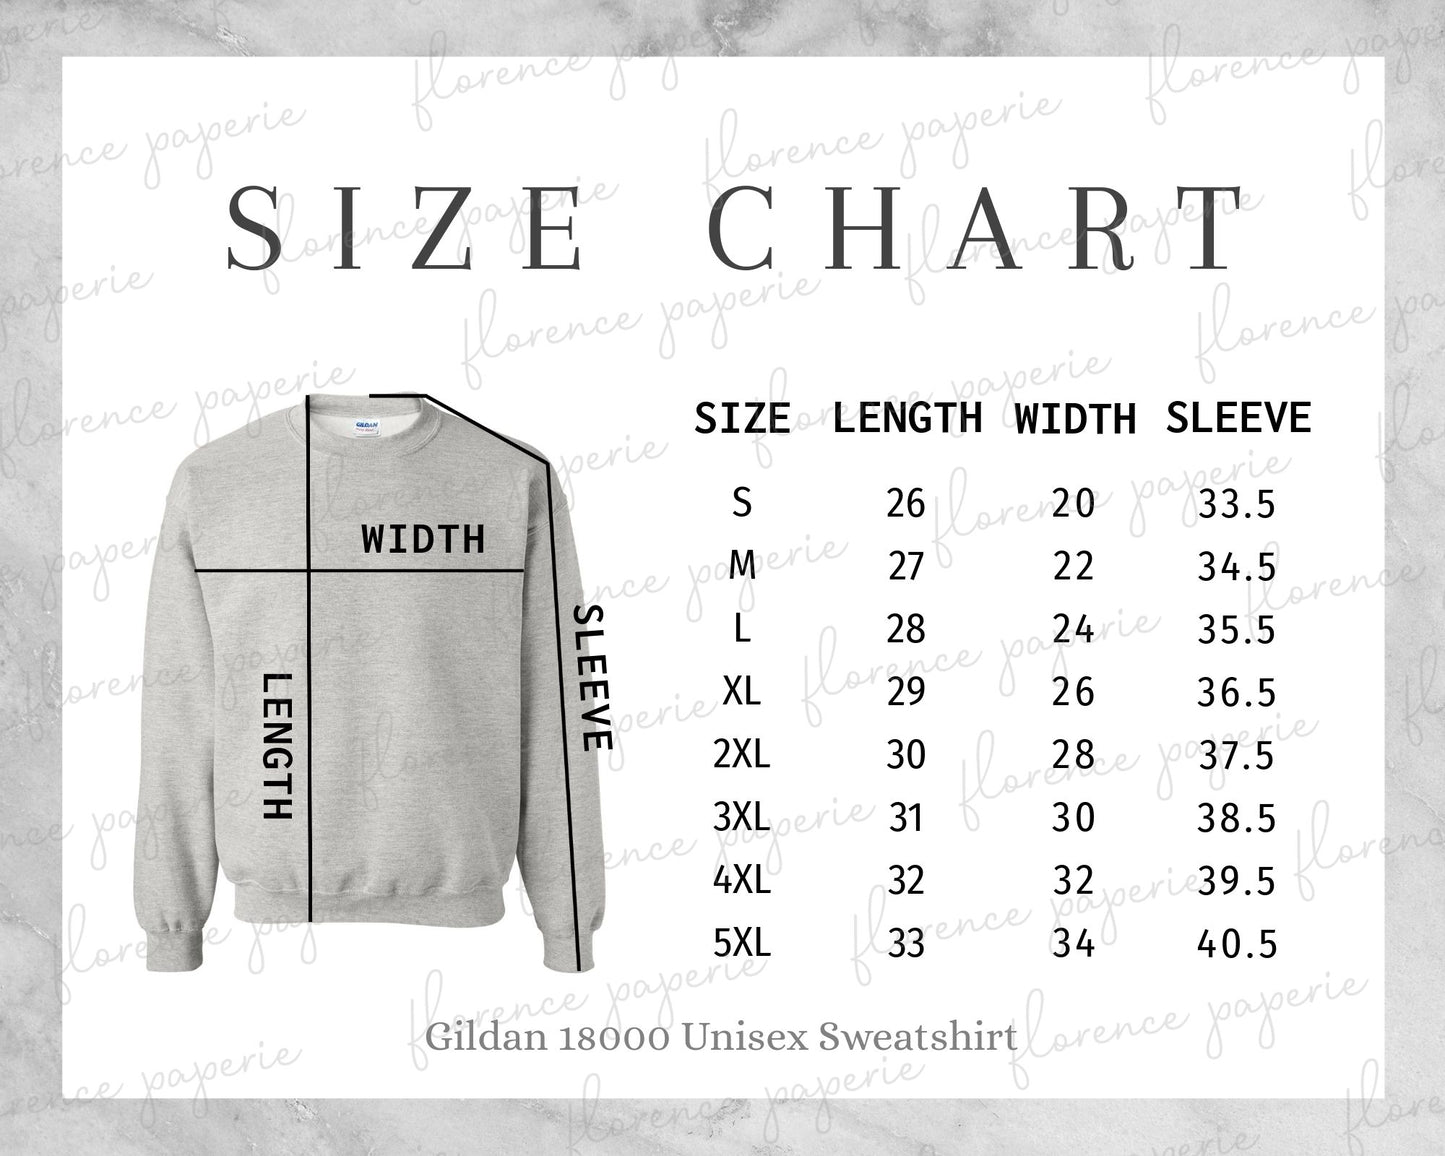 Sizing chart for this Gildan sweatshirt